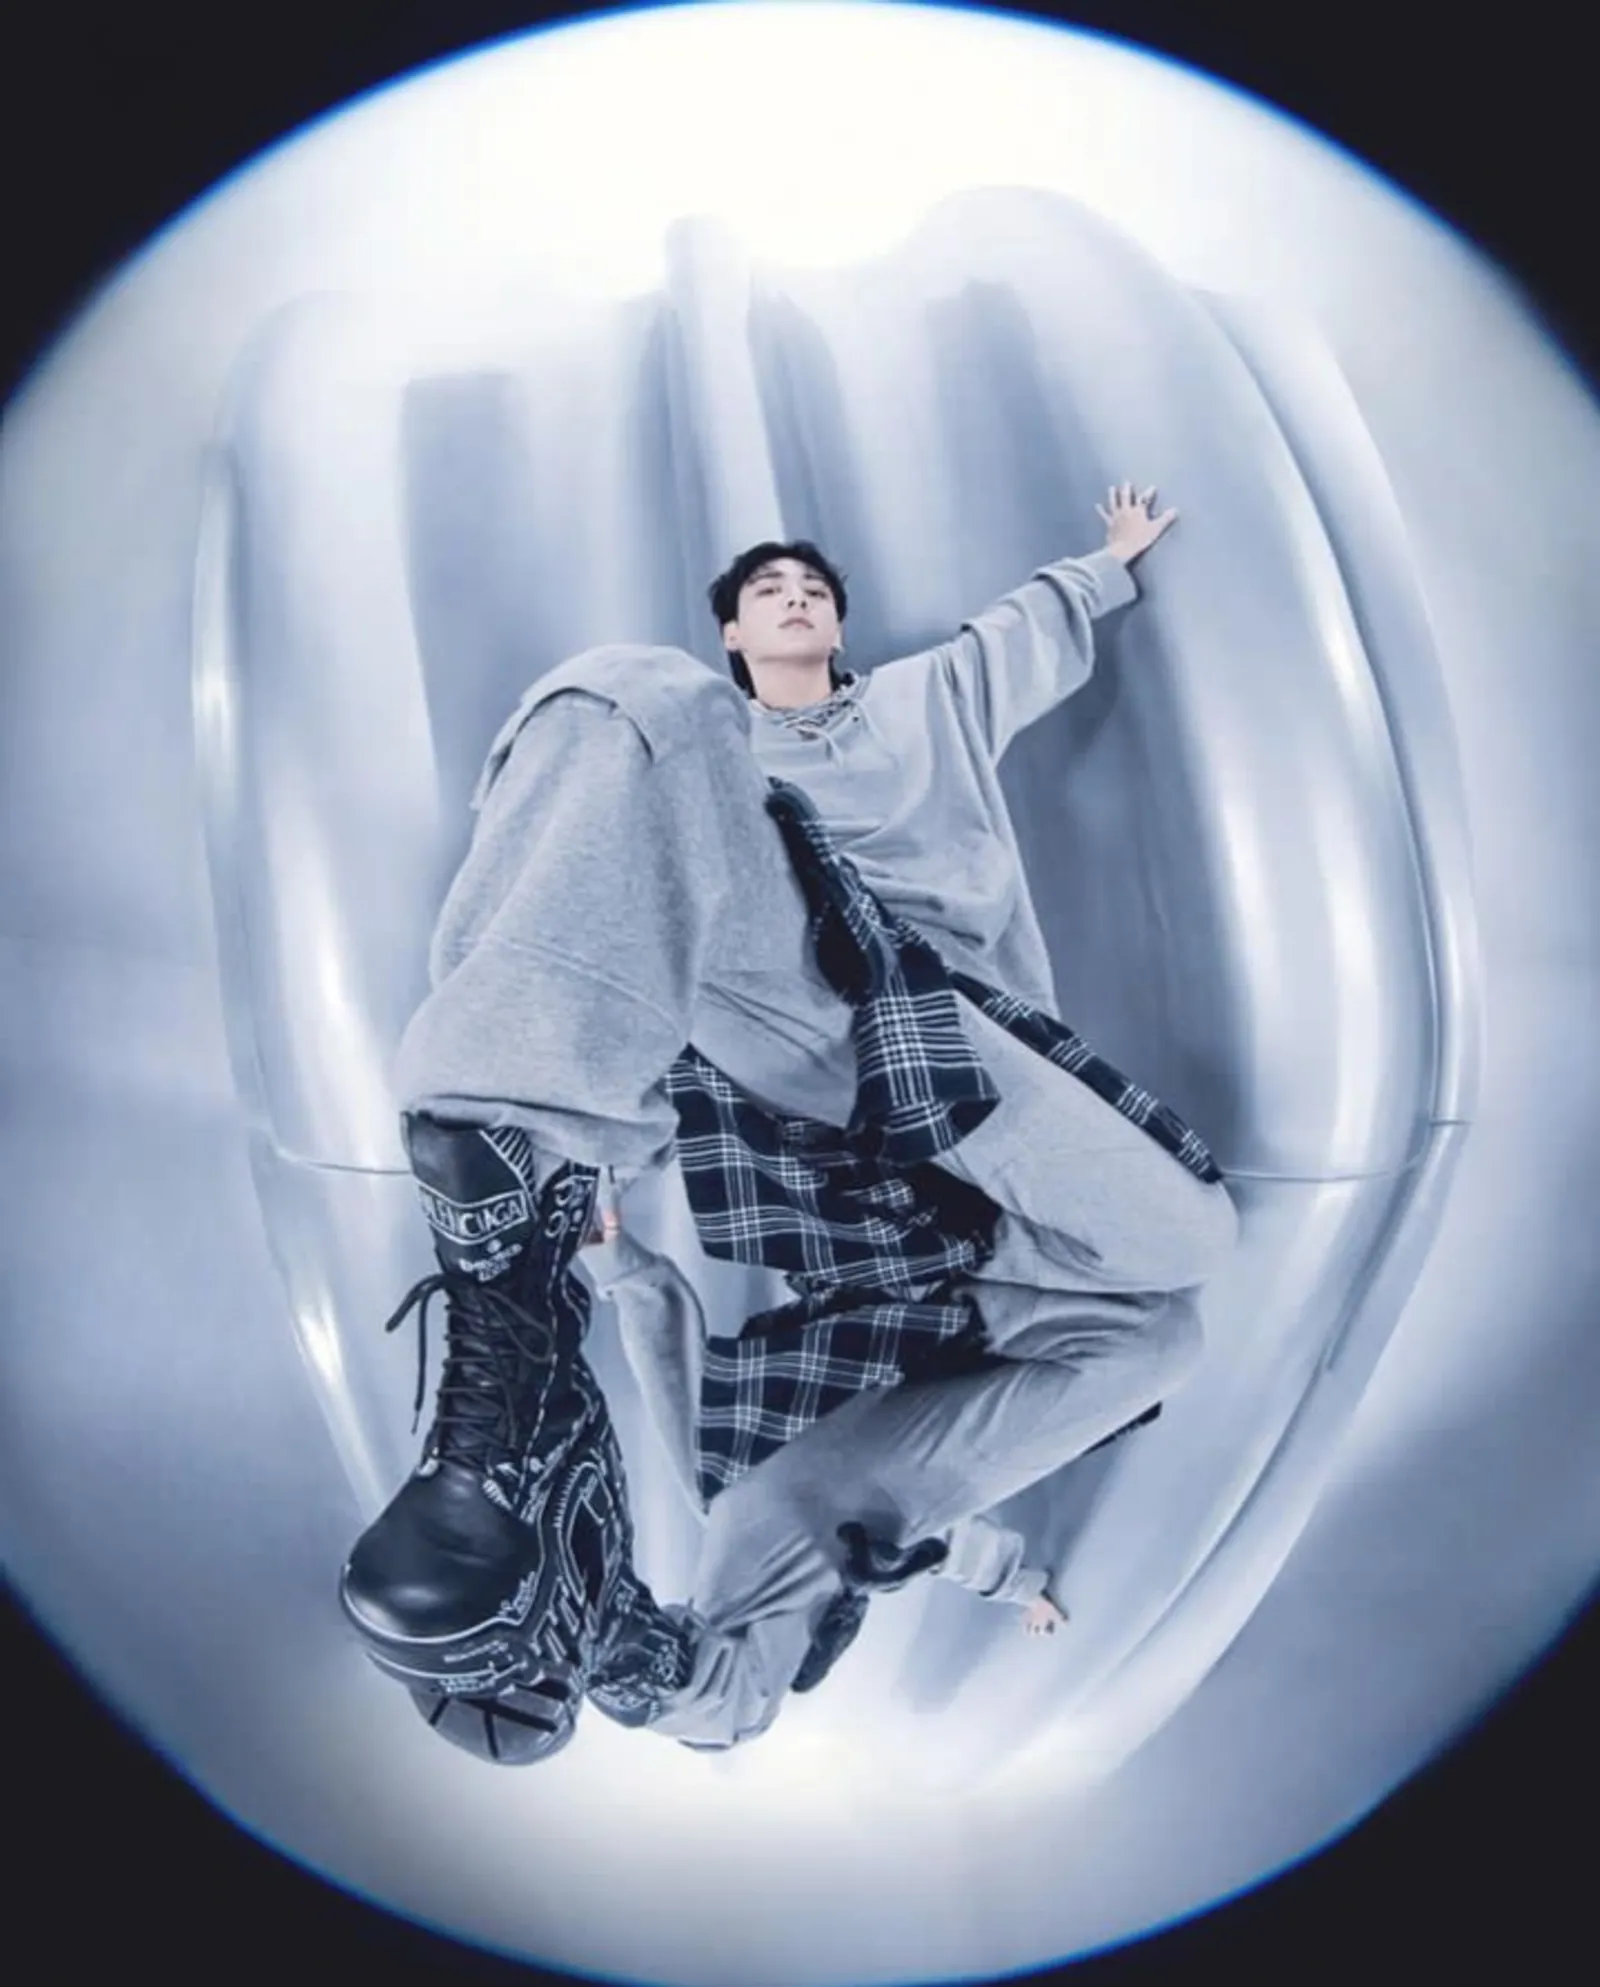 6 Fakta Perilisan Single "3D", Karya Jung Kook & Jack Harlow